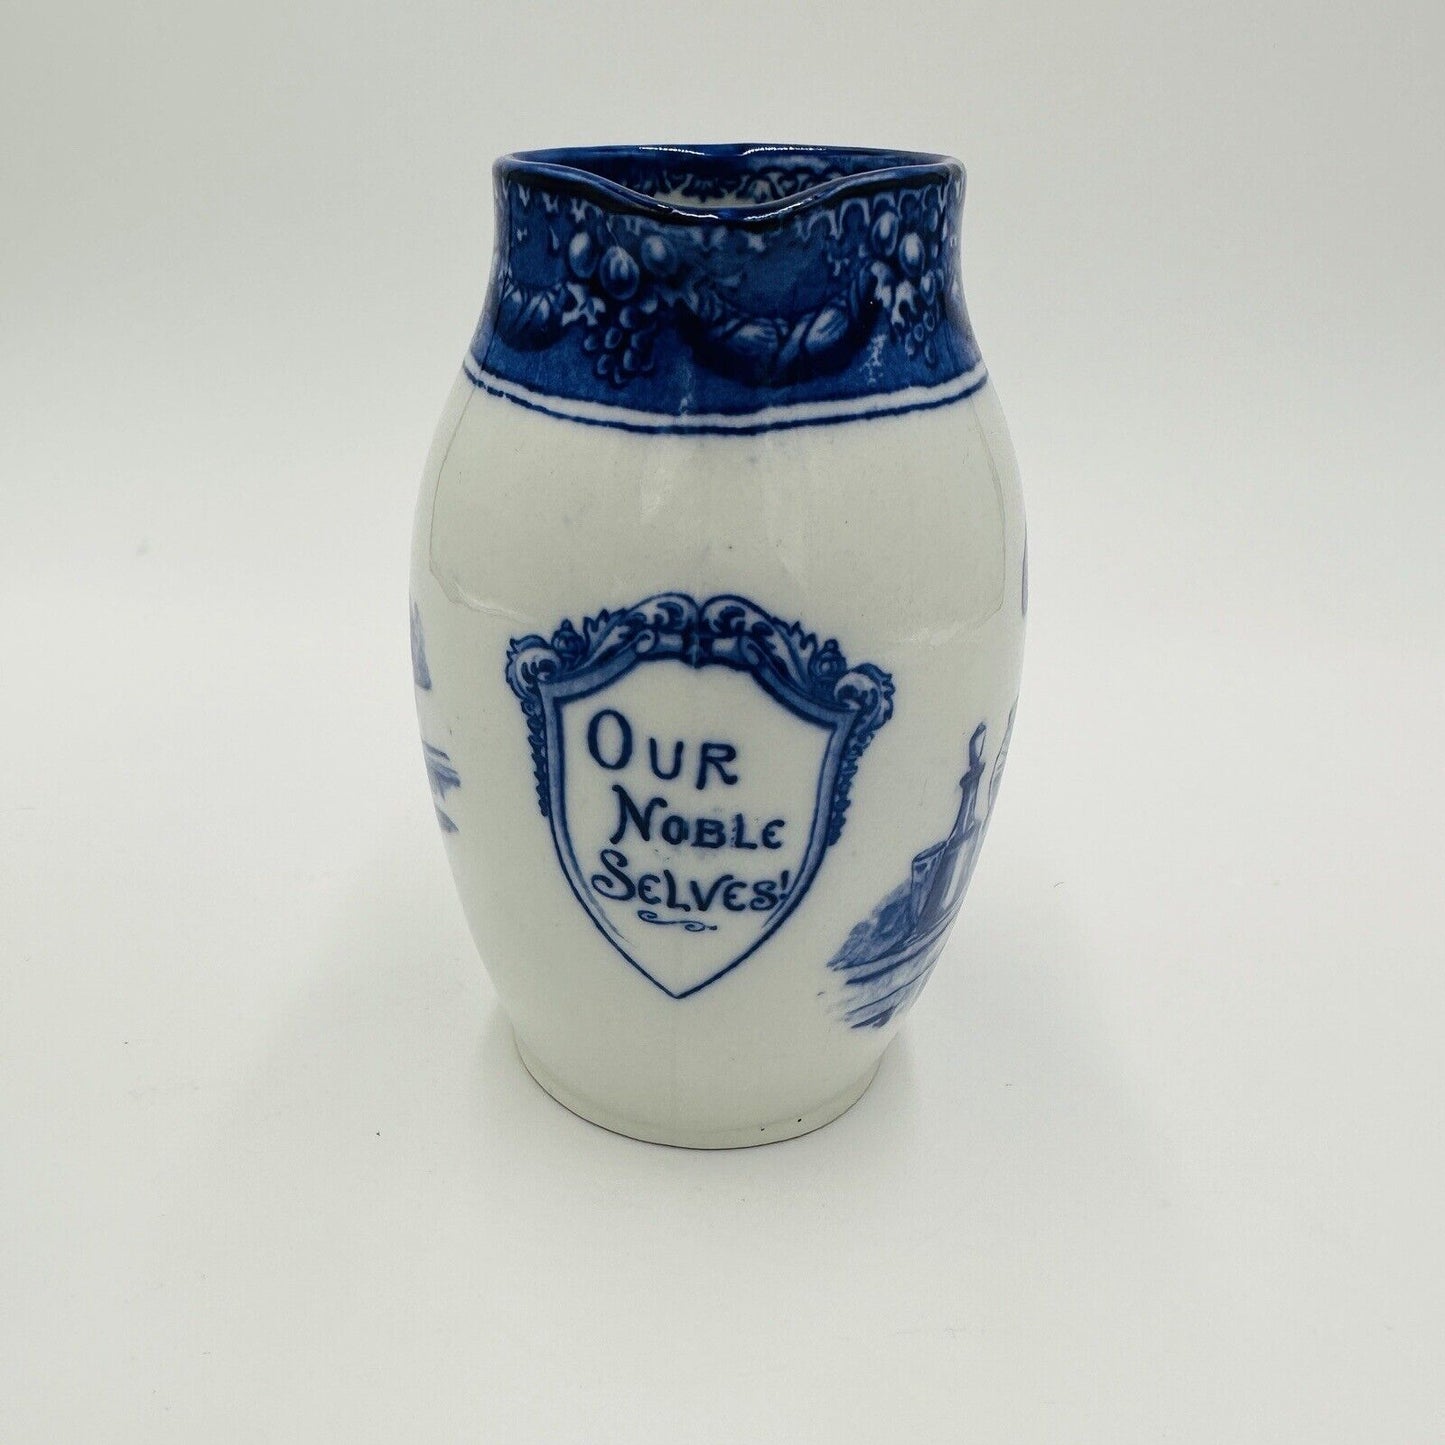 Antique Royal Doulton Pitcher Morissian Flow Blue Pottery The King God Bless Him